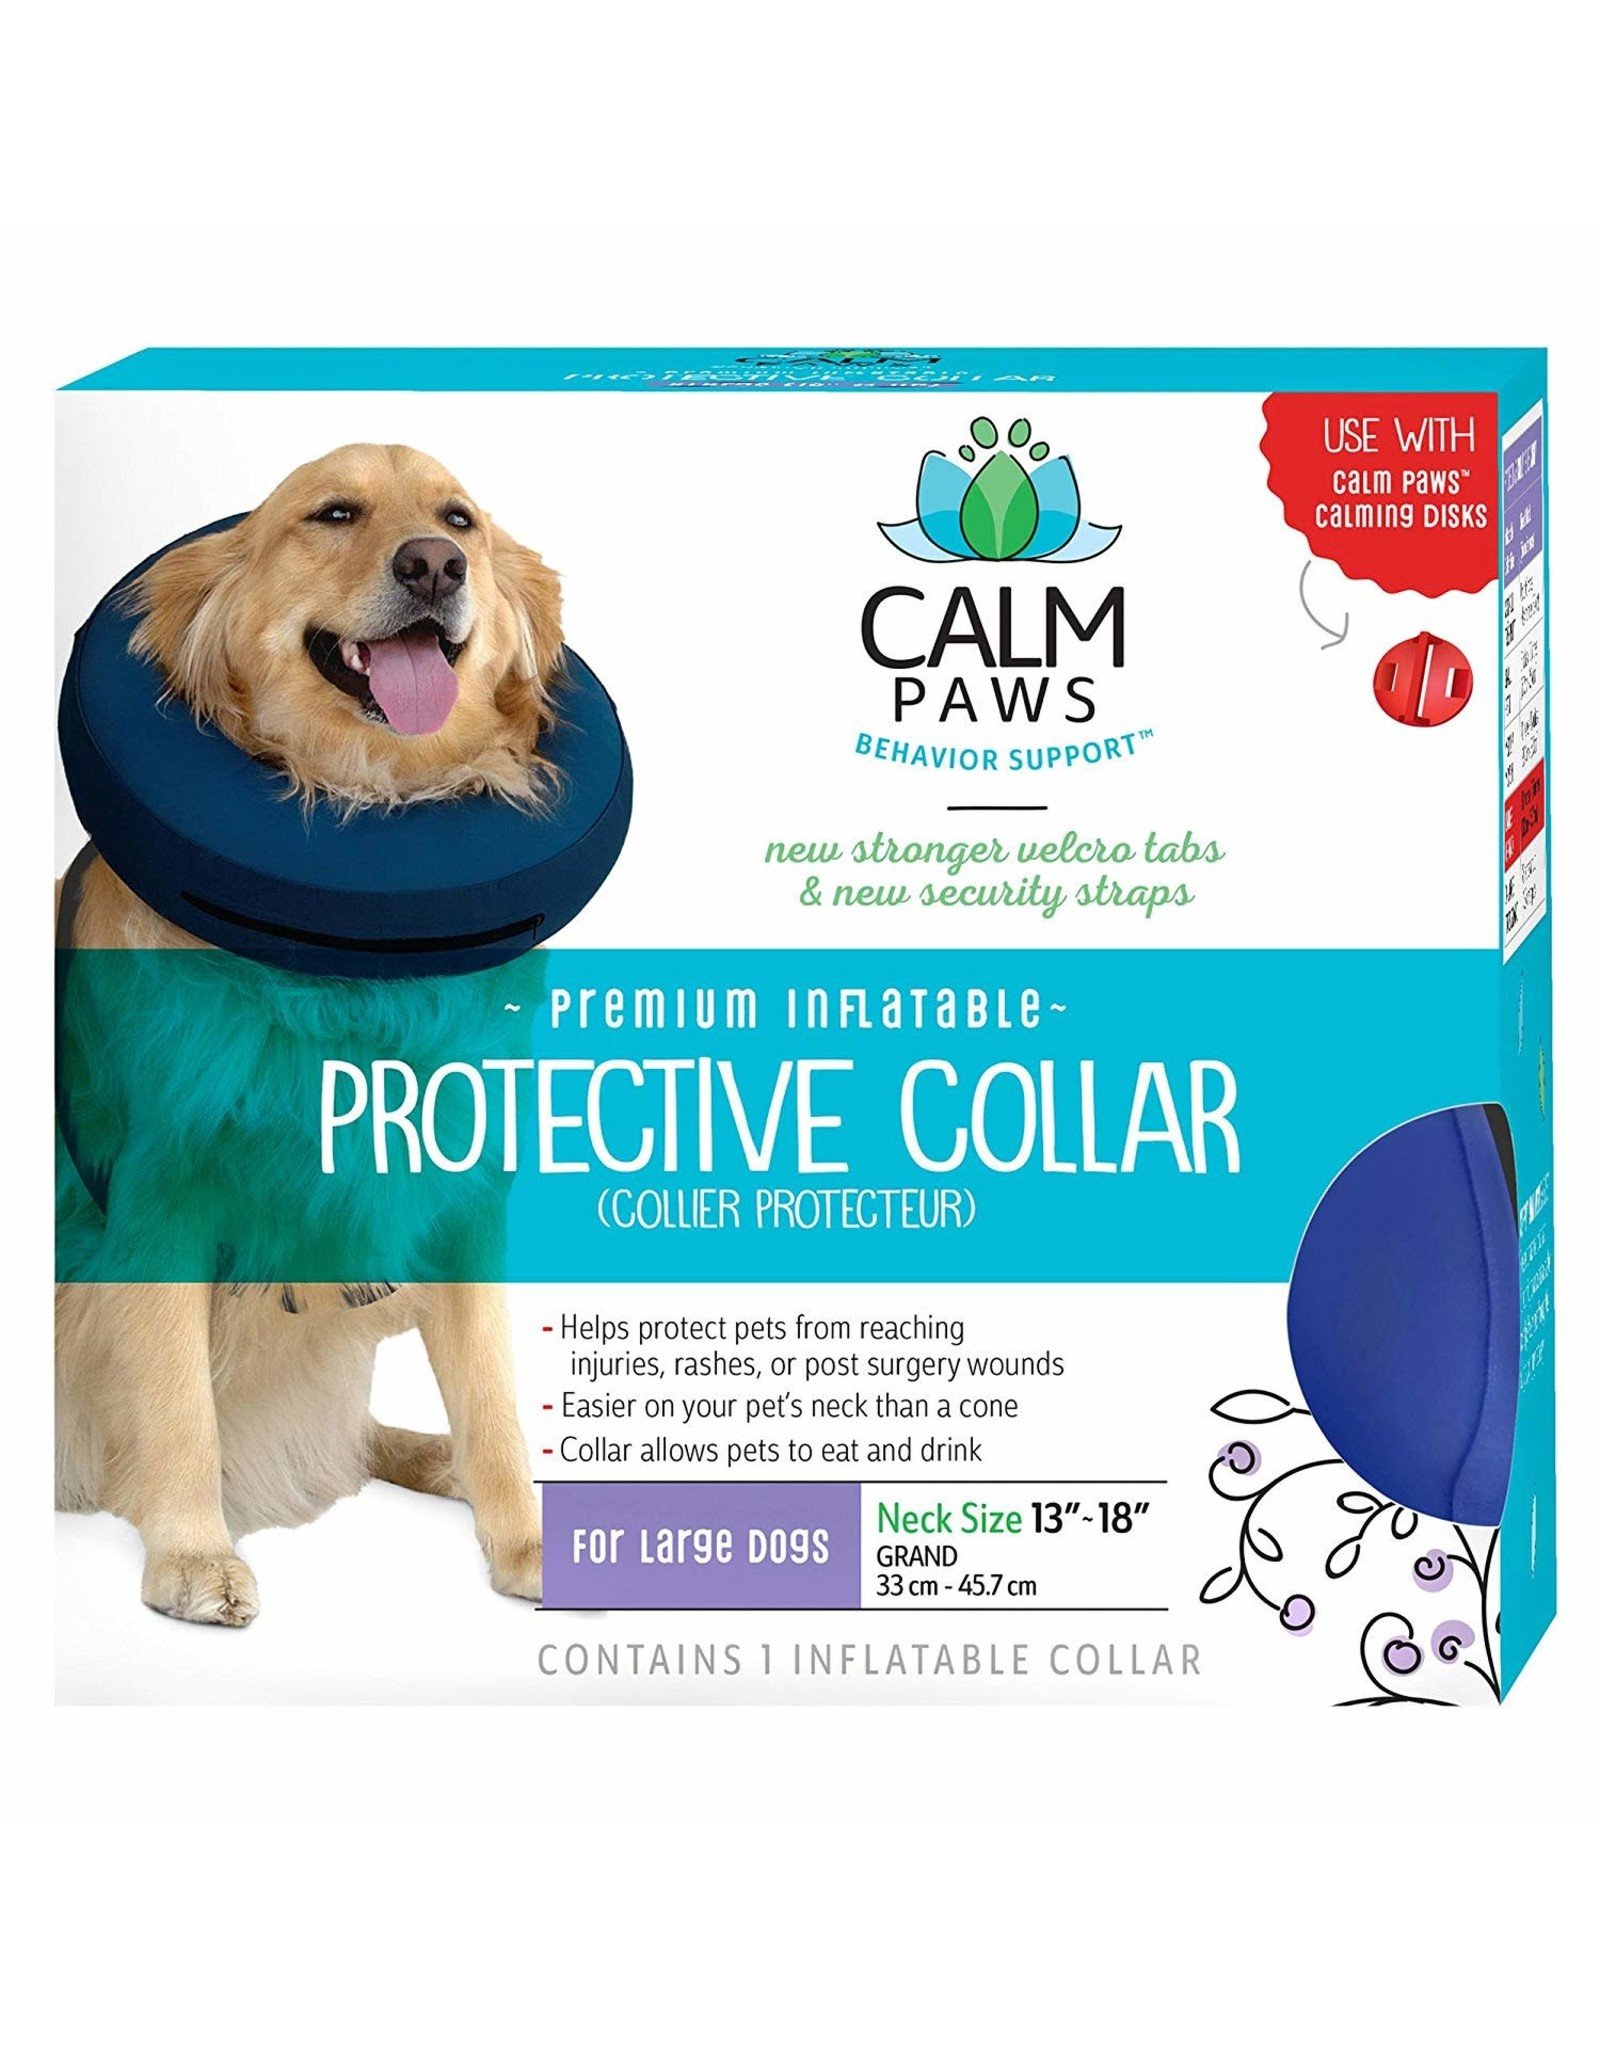 Calm Paws Calm Paws Protective Inflatable Collar